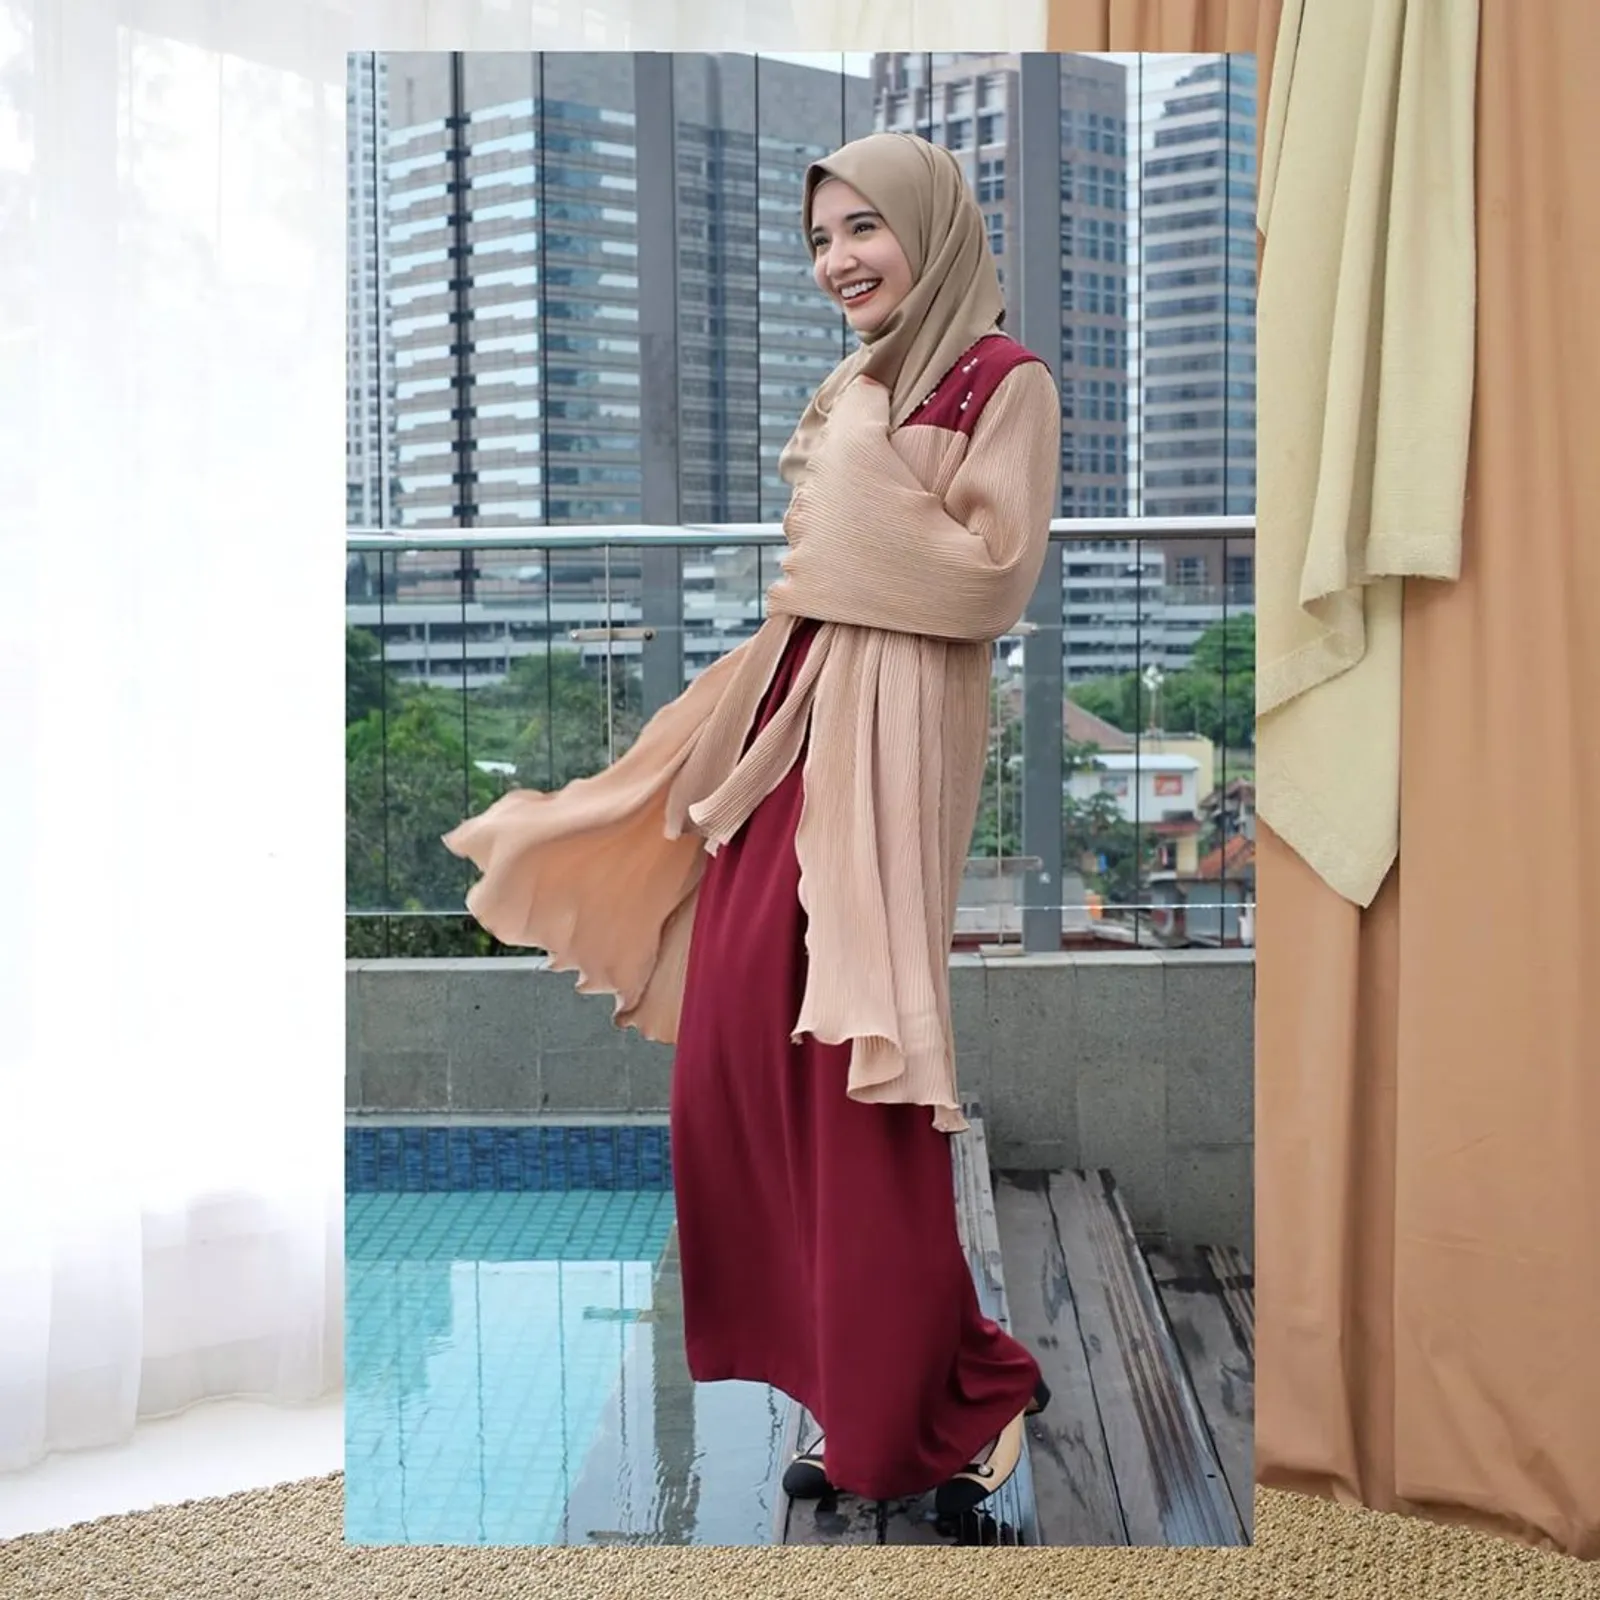 Deretan Artis Indonesia yang Memiliki Brand Fashion Hijab